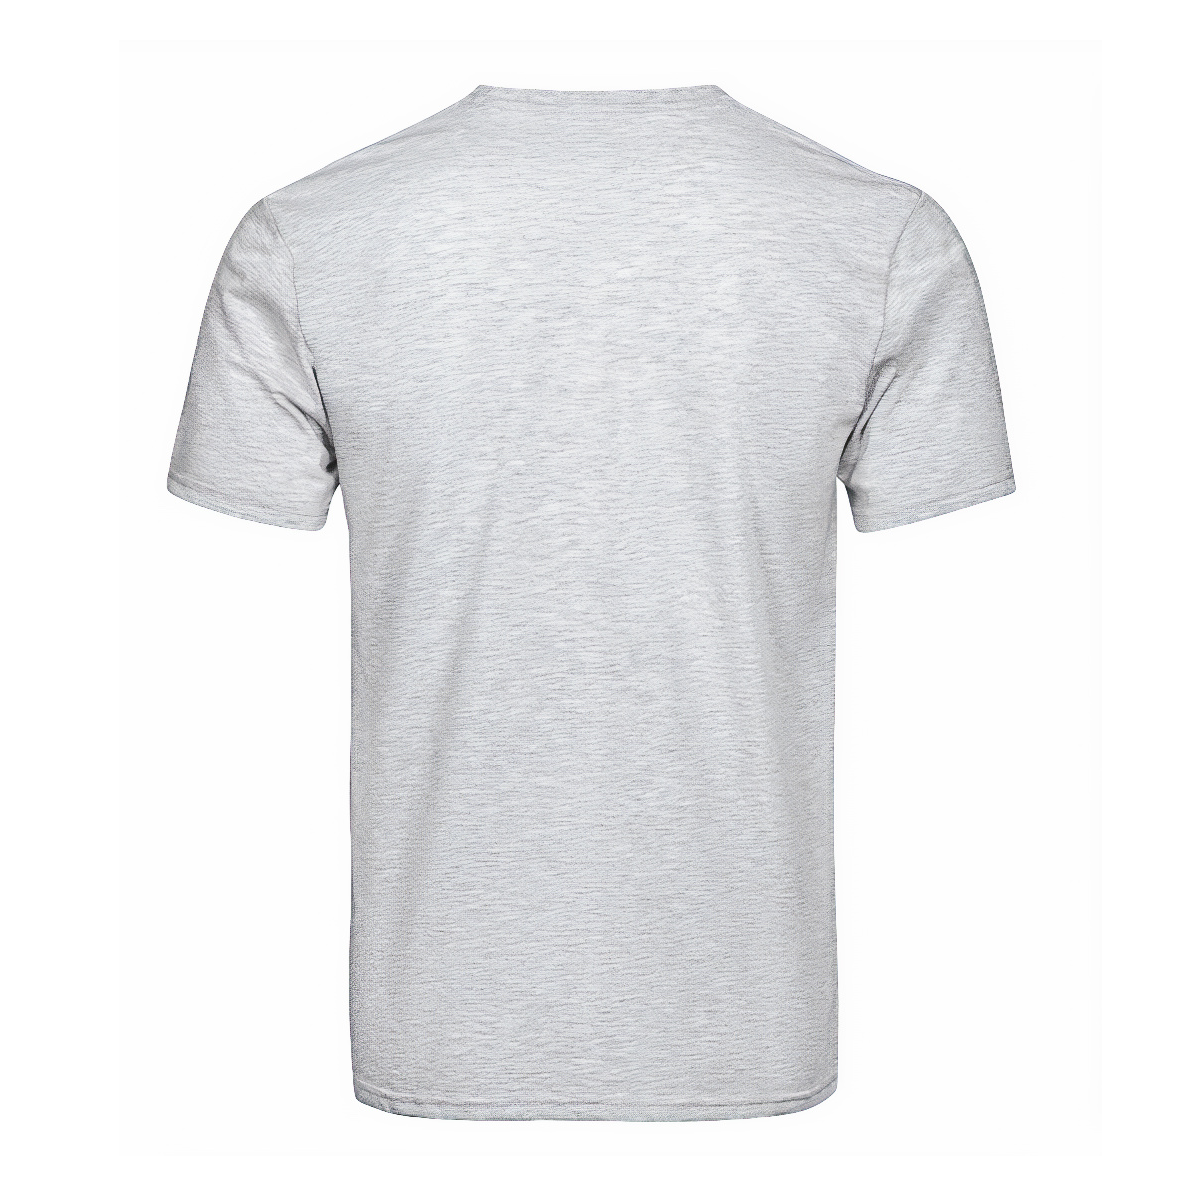 Falconer Tartan Crest T-shirt - I'm not yelling style